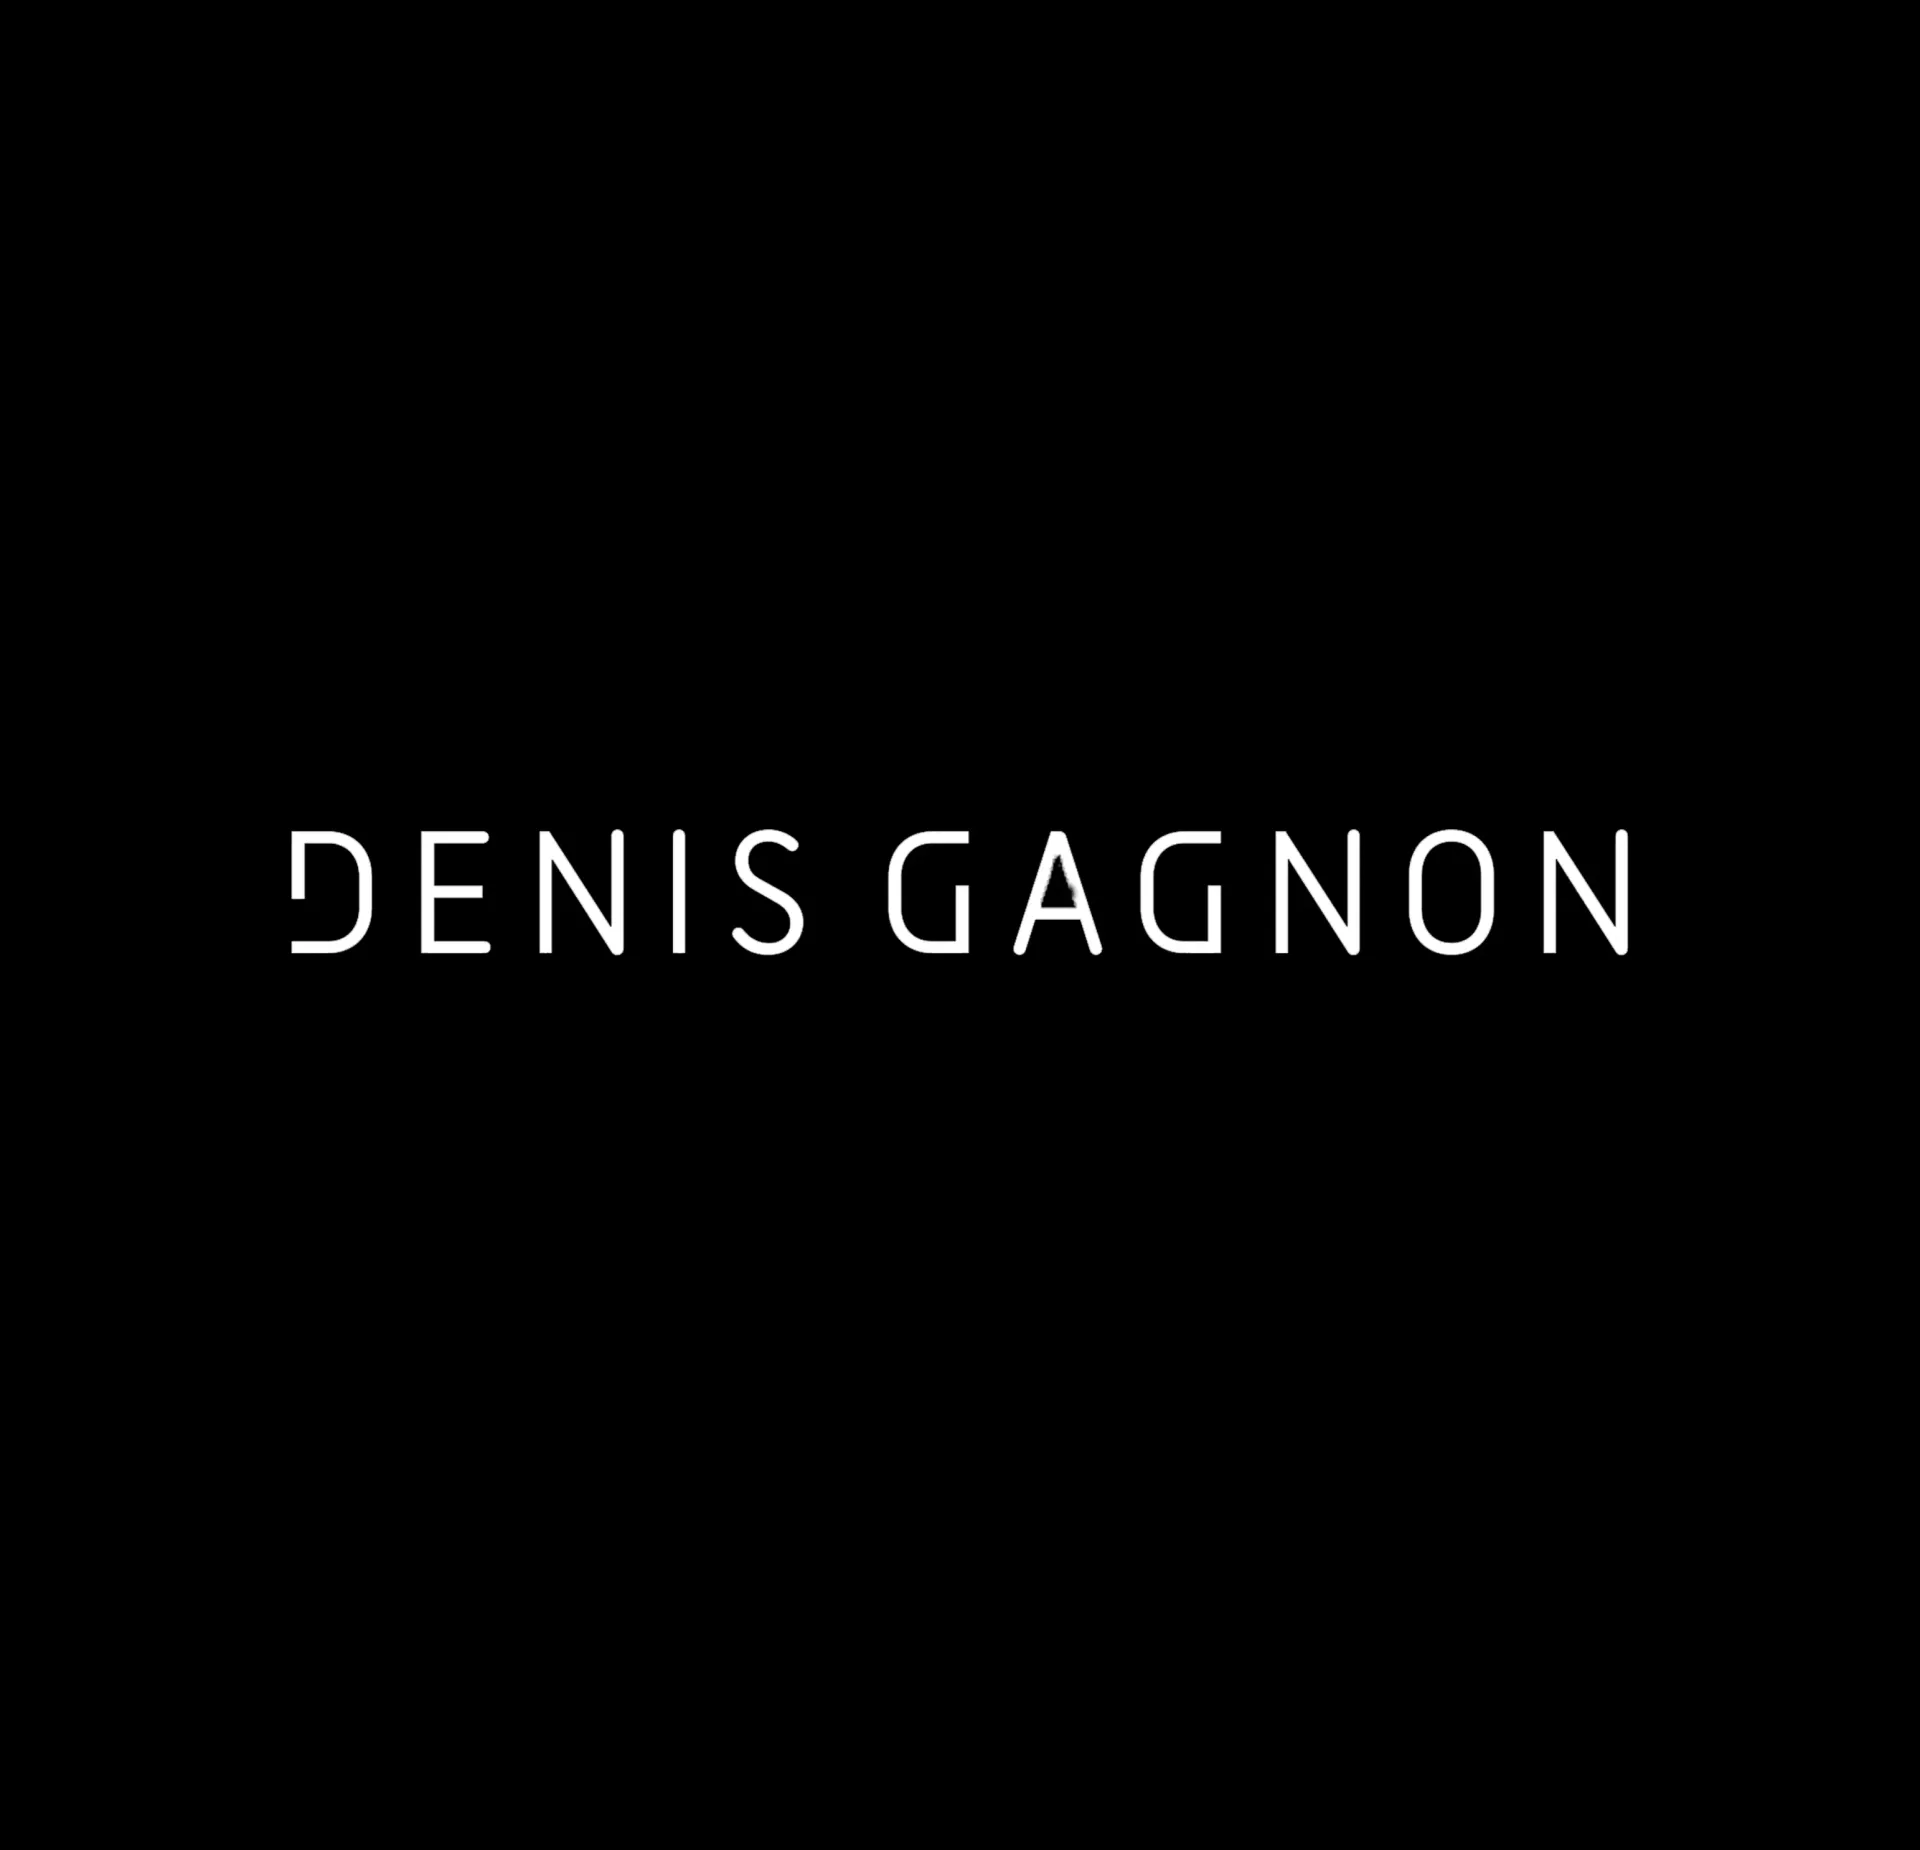 DENIS GAGNON logo